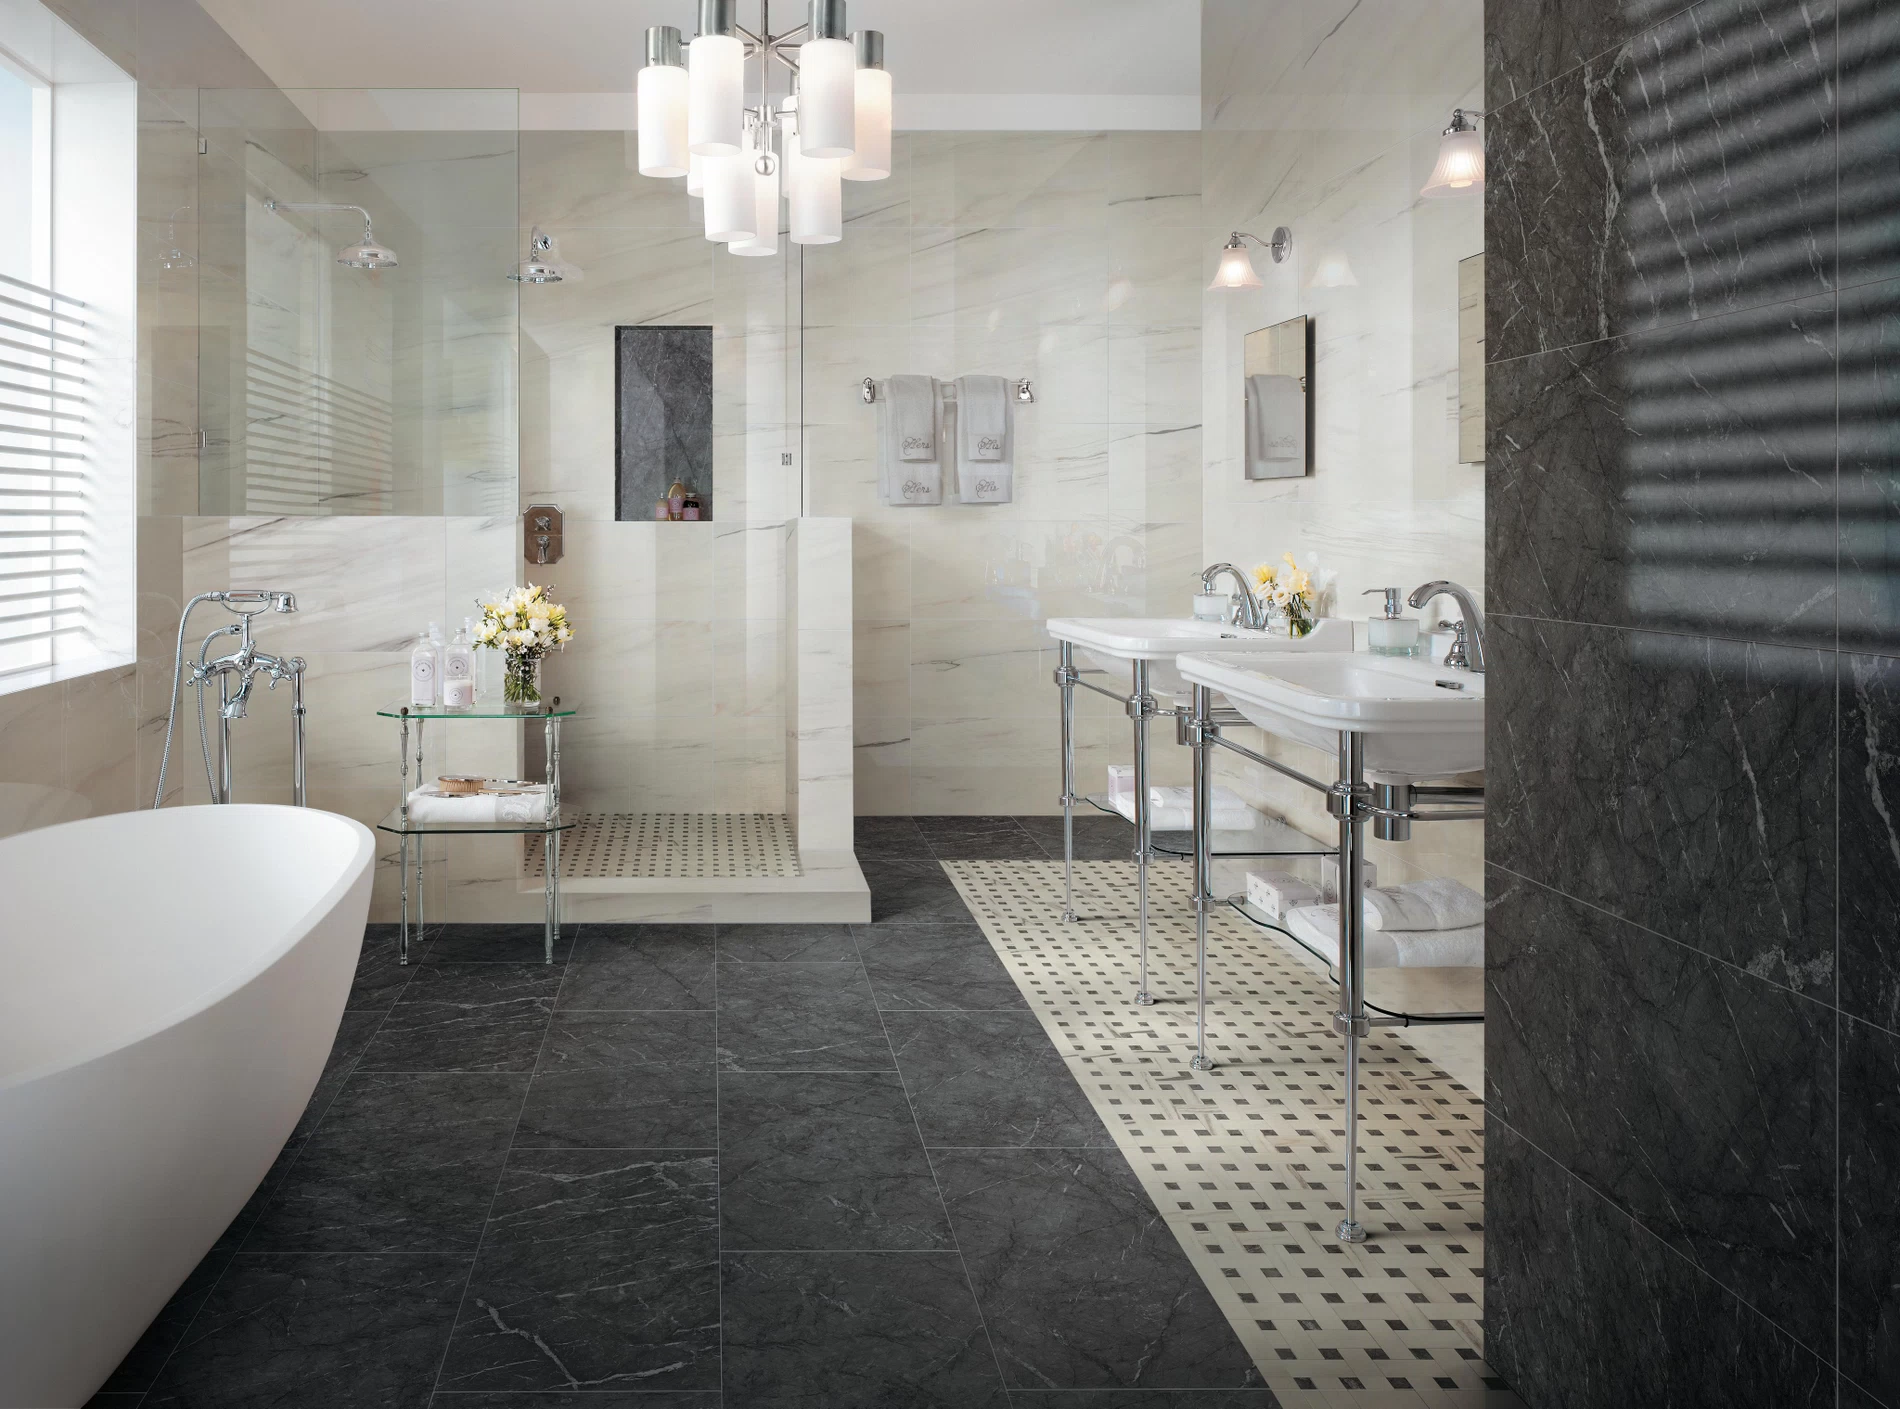 Bathroom Floor Tiles, Italian Porcelain Tiles